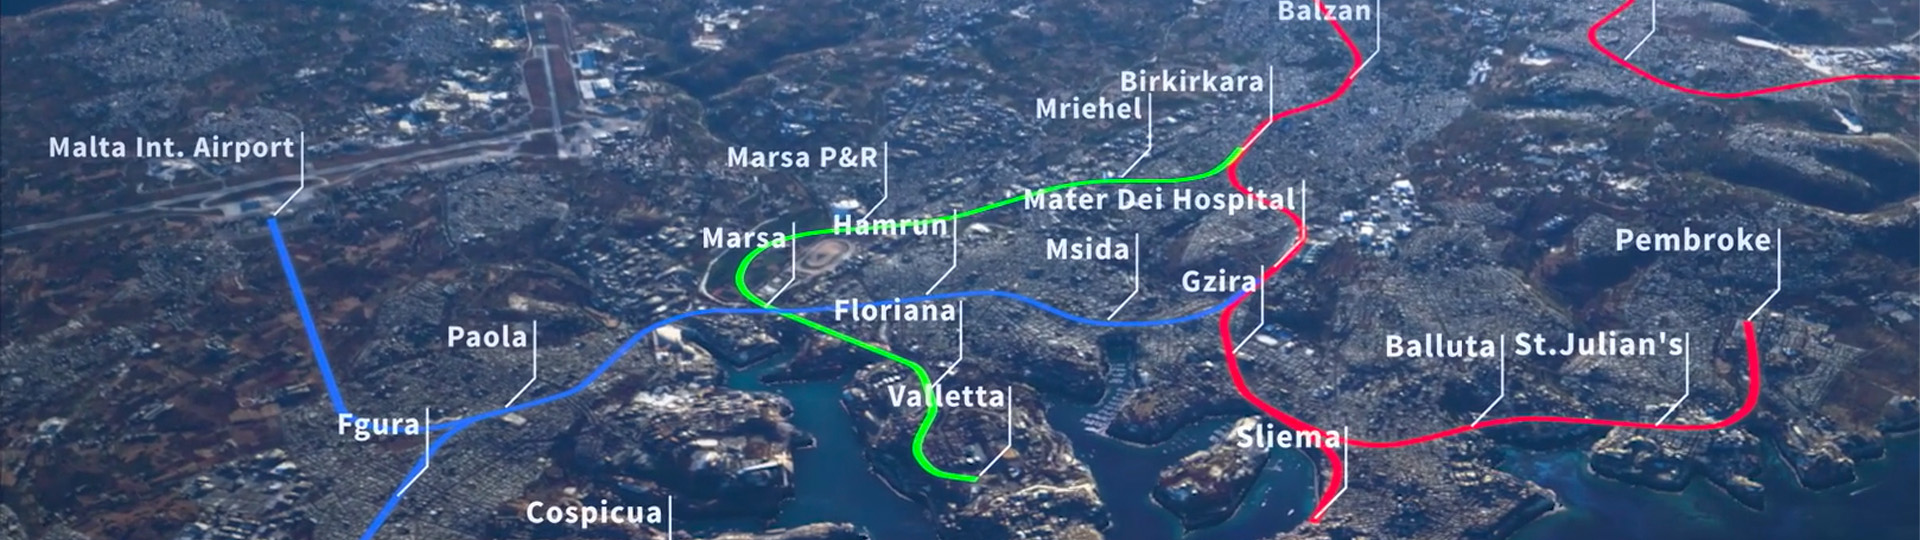 €6.2 billion underground Metro proposal stretches 25 stations across Malta 